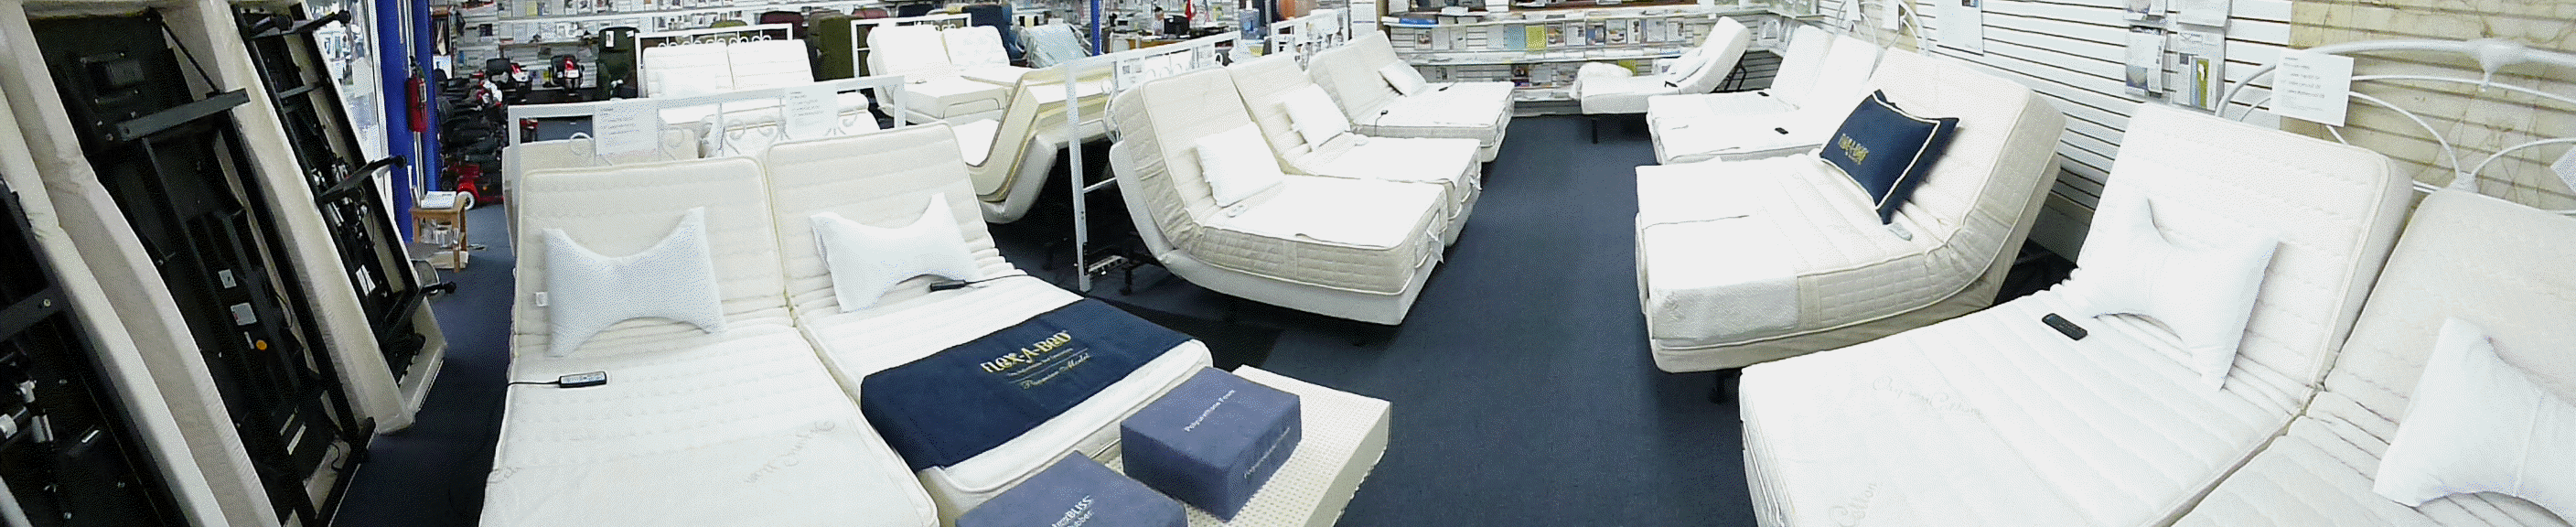 adjustable bed mattresses